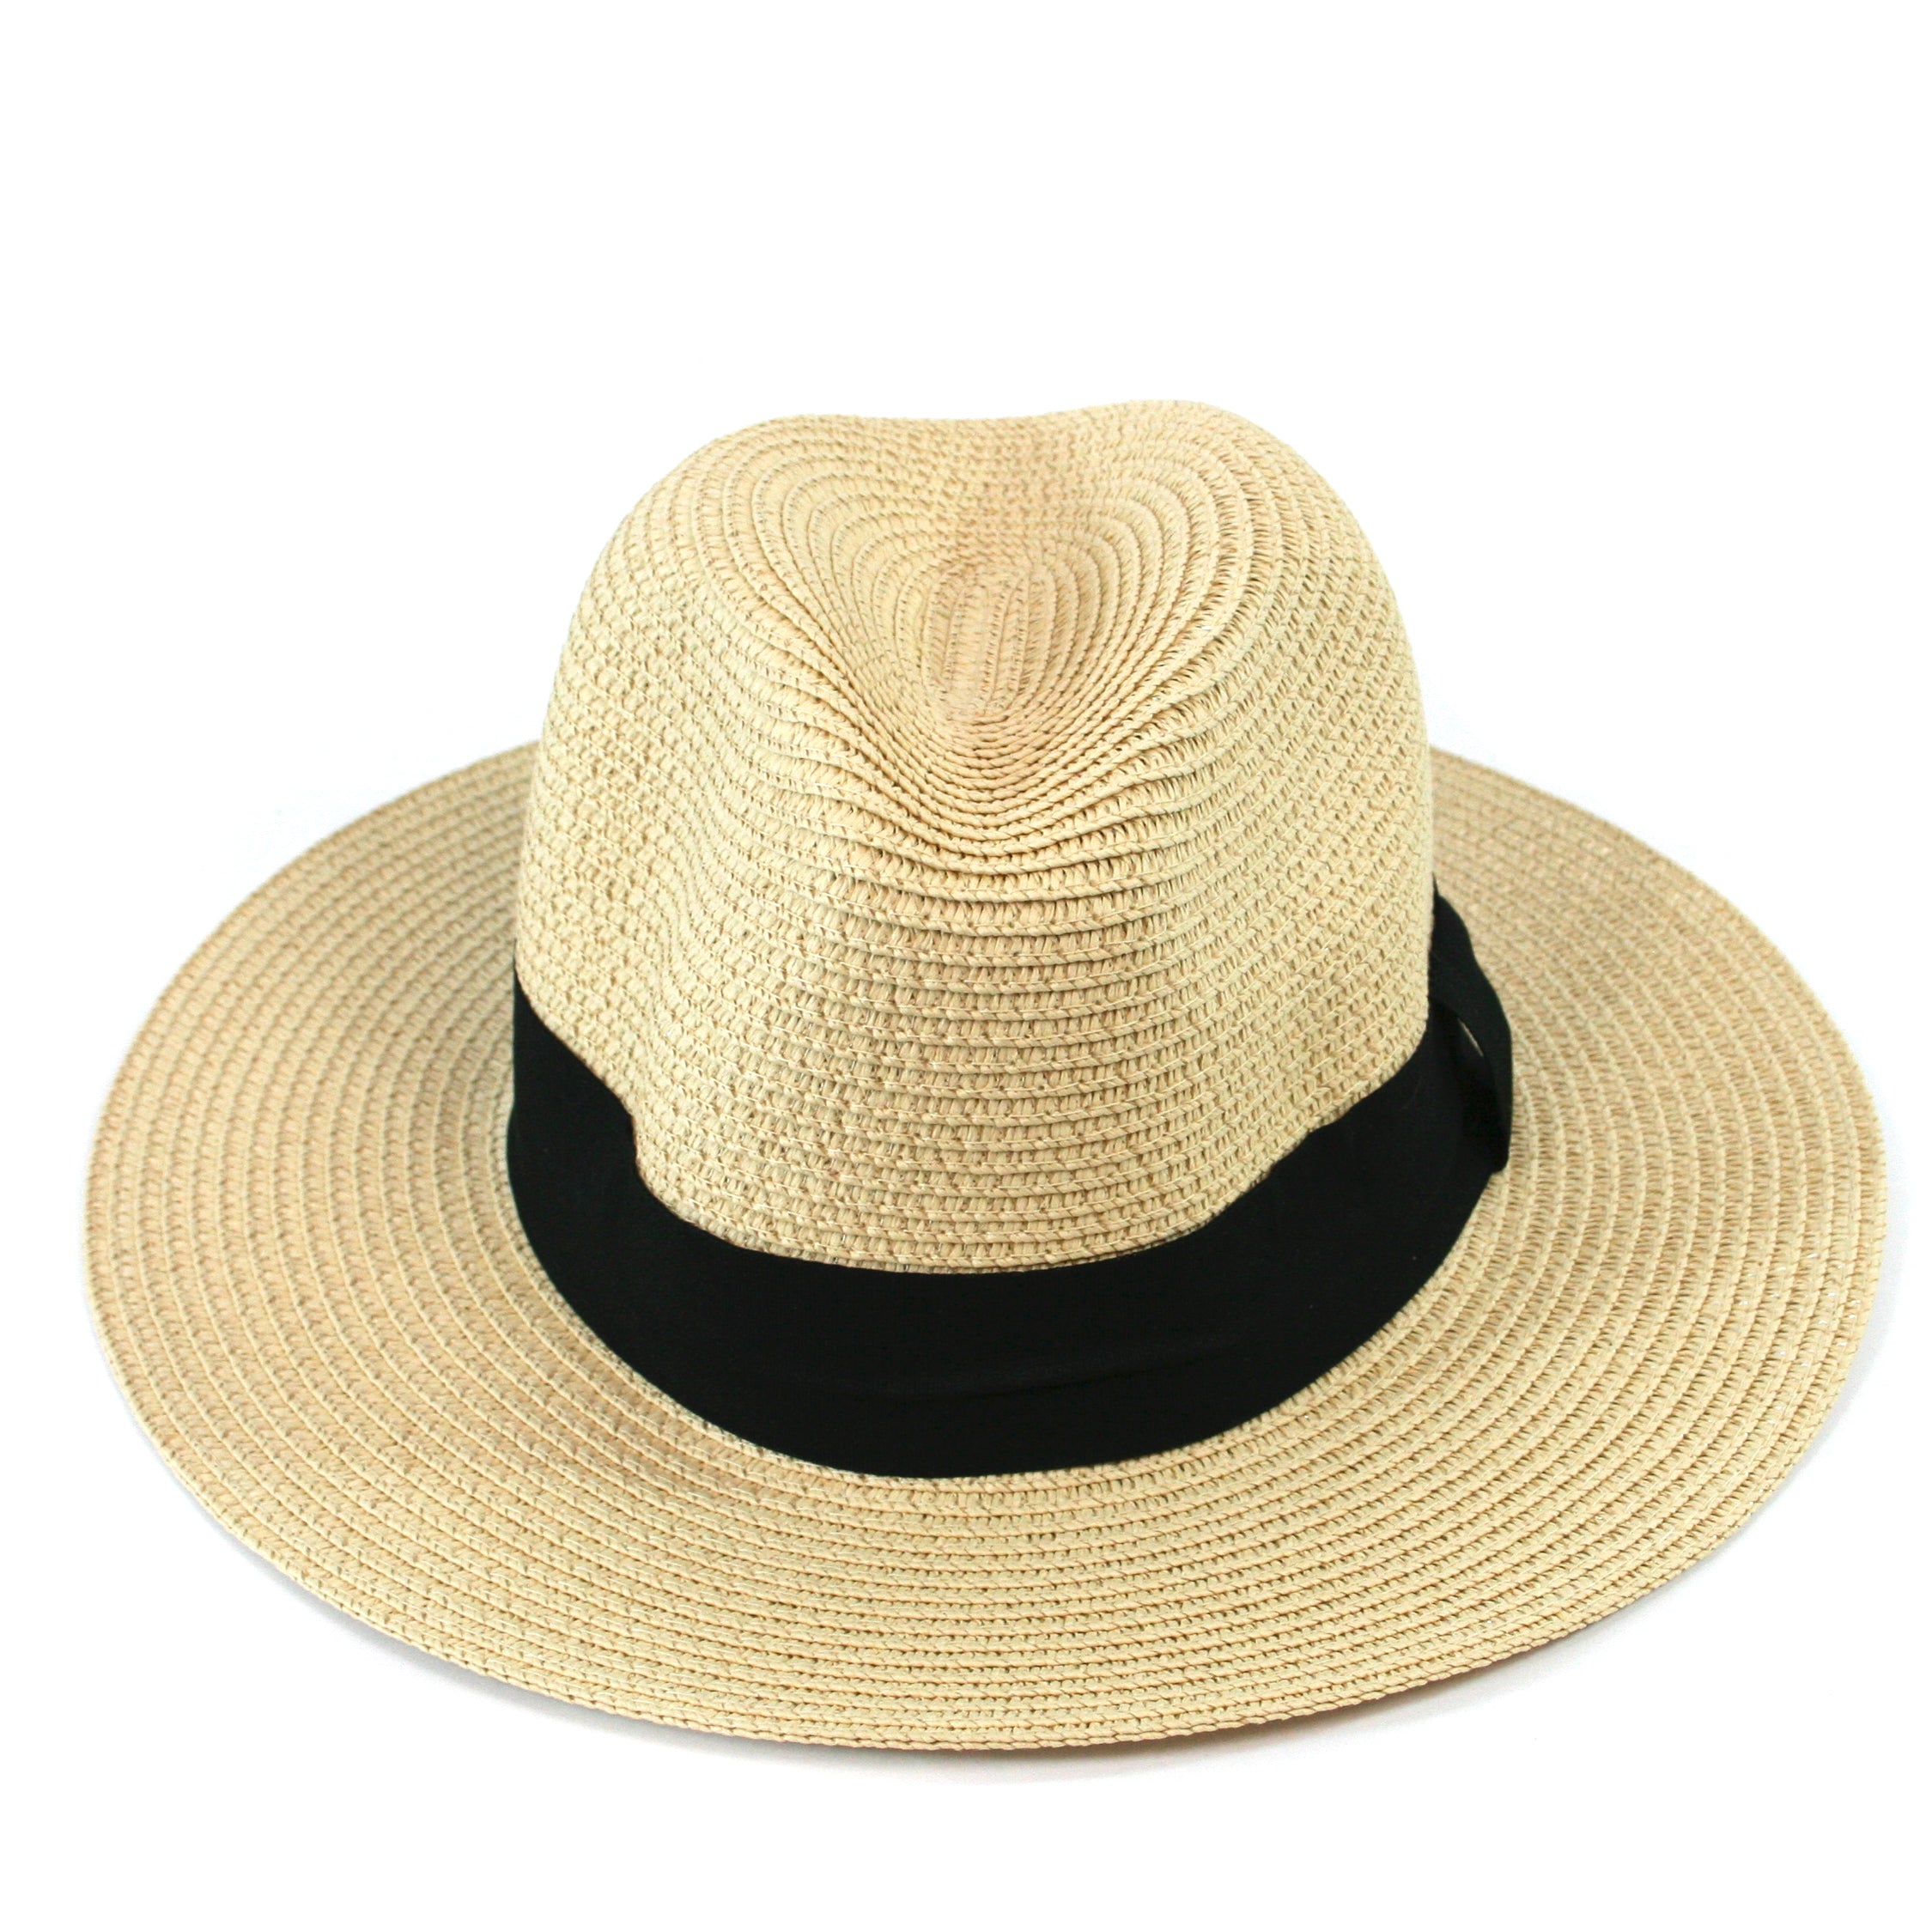 Panama Style Foldable Sun Hat in Bag  - Large (59cm)